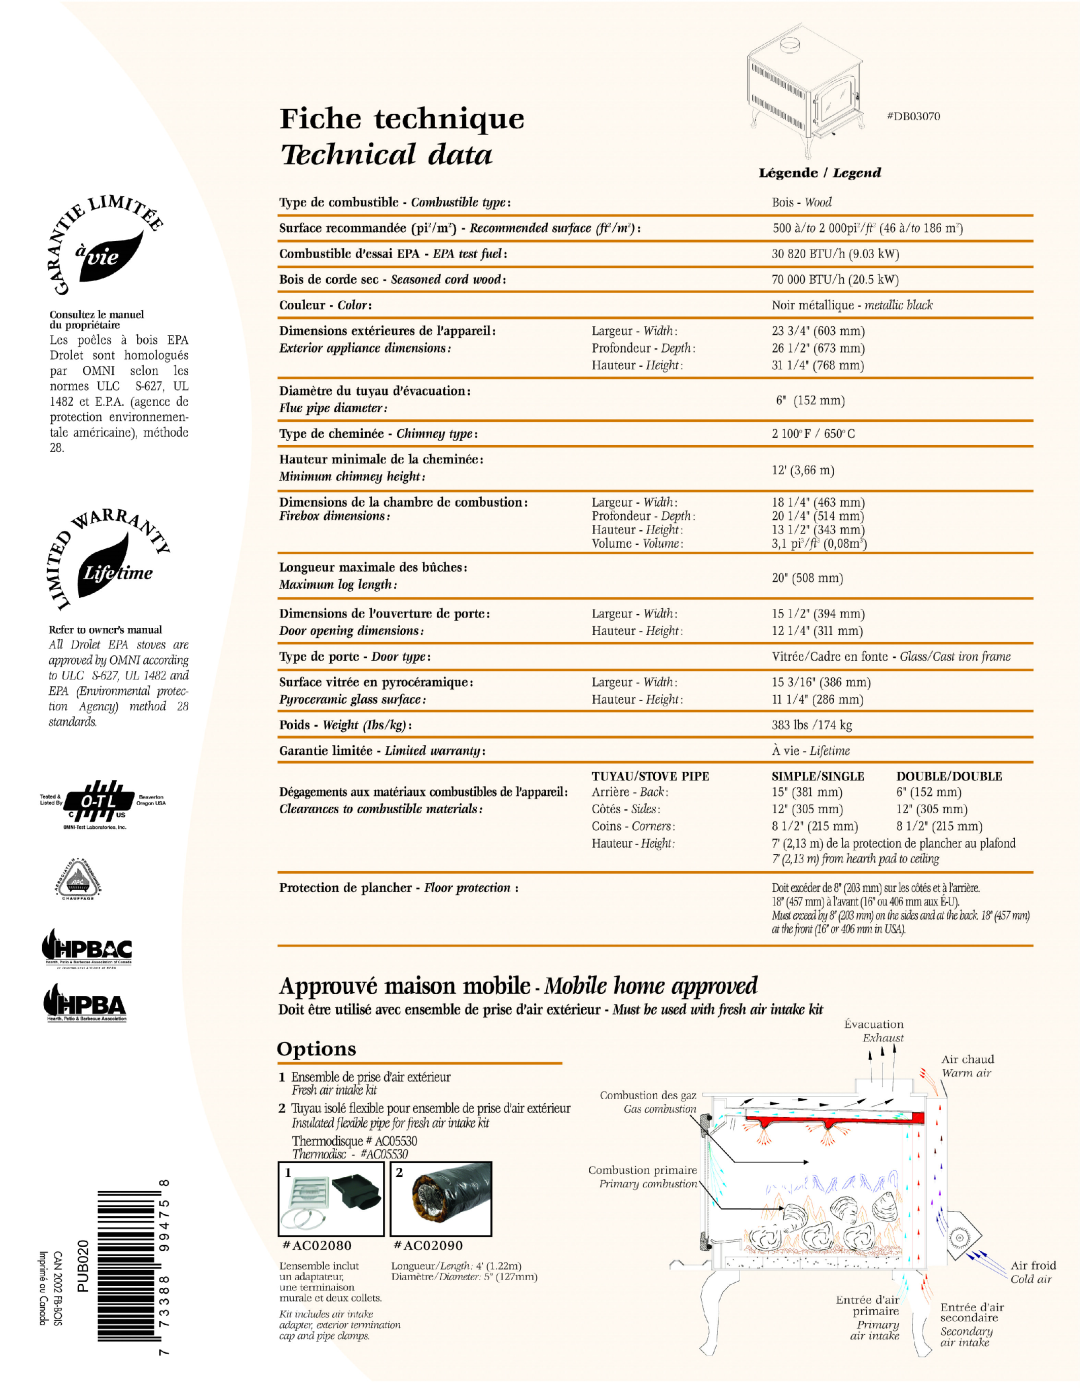 Drolet DB03070 manual 